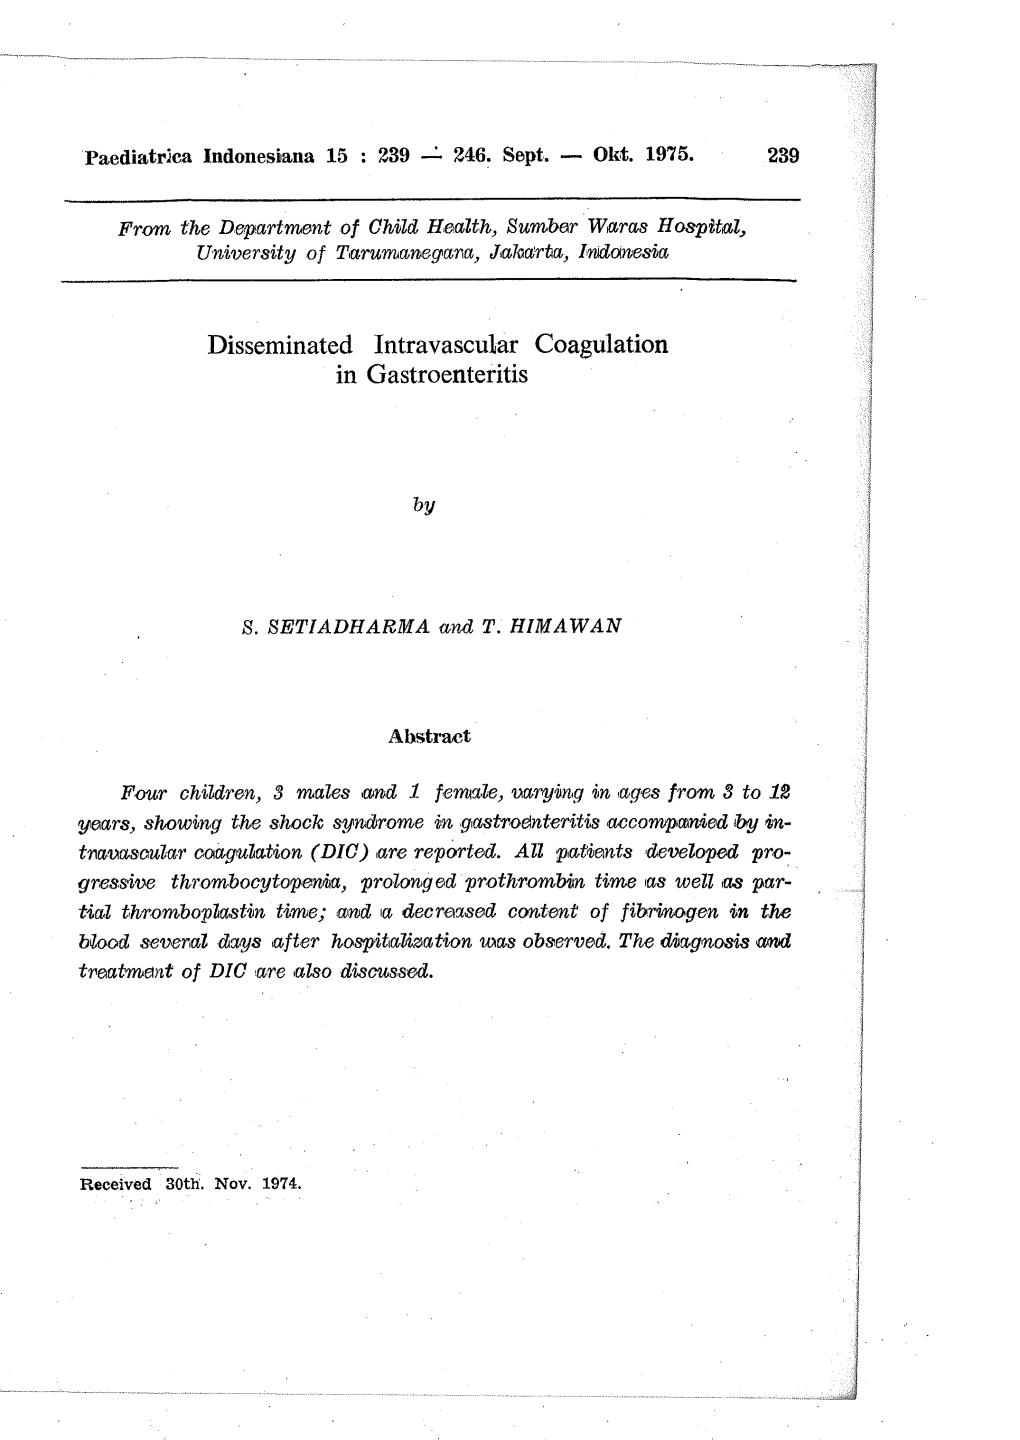 Disseminated Intravascular Coagulation in Gastroenteritis